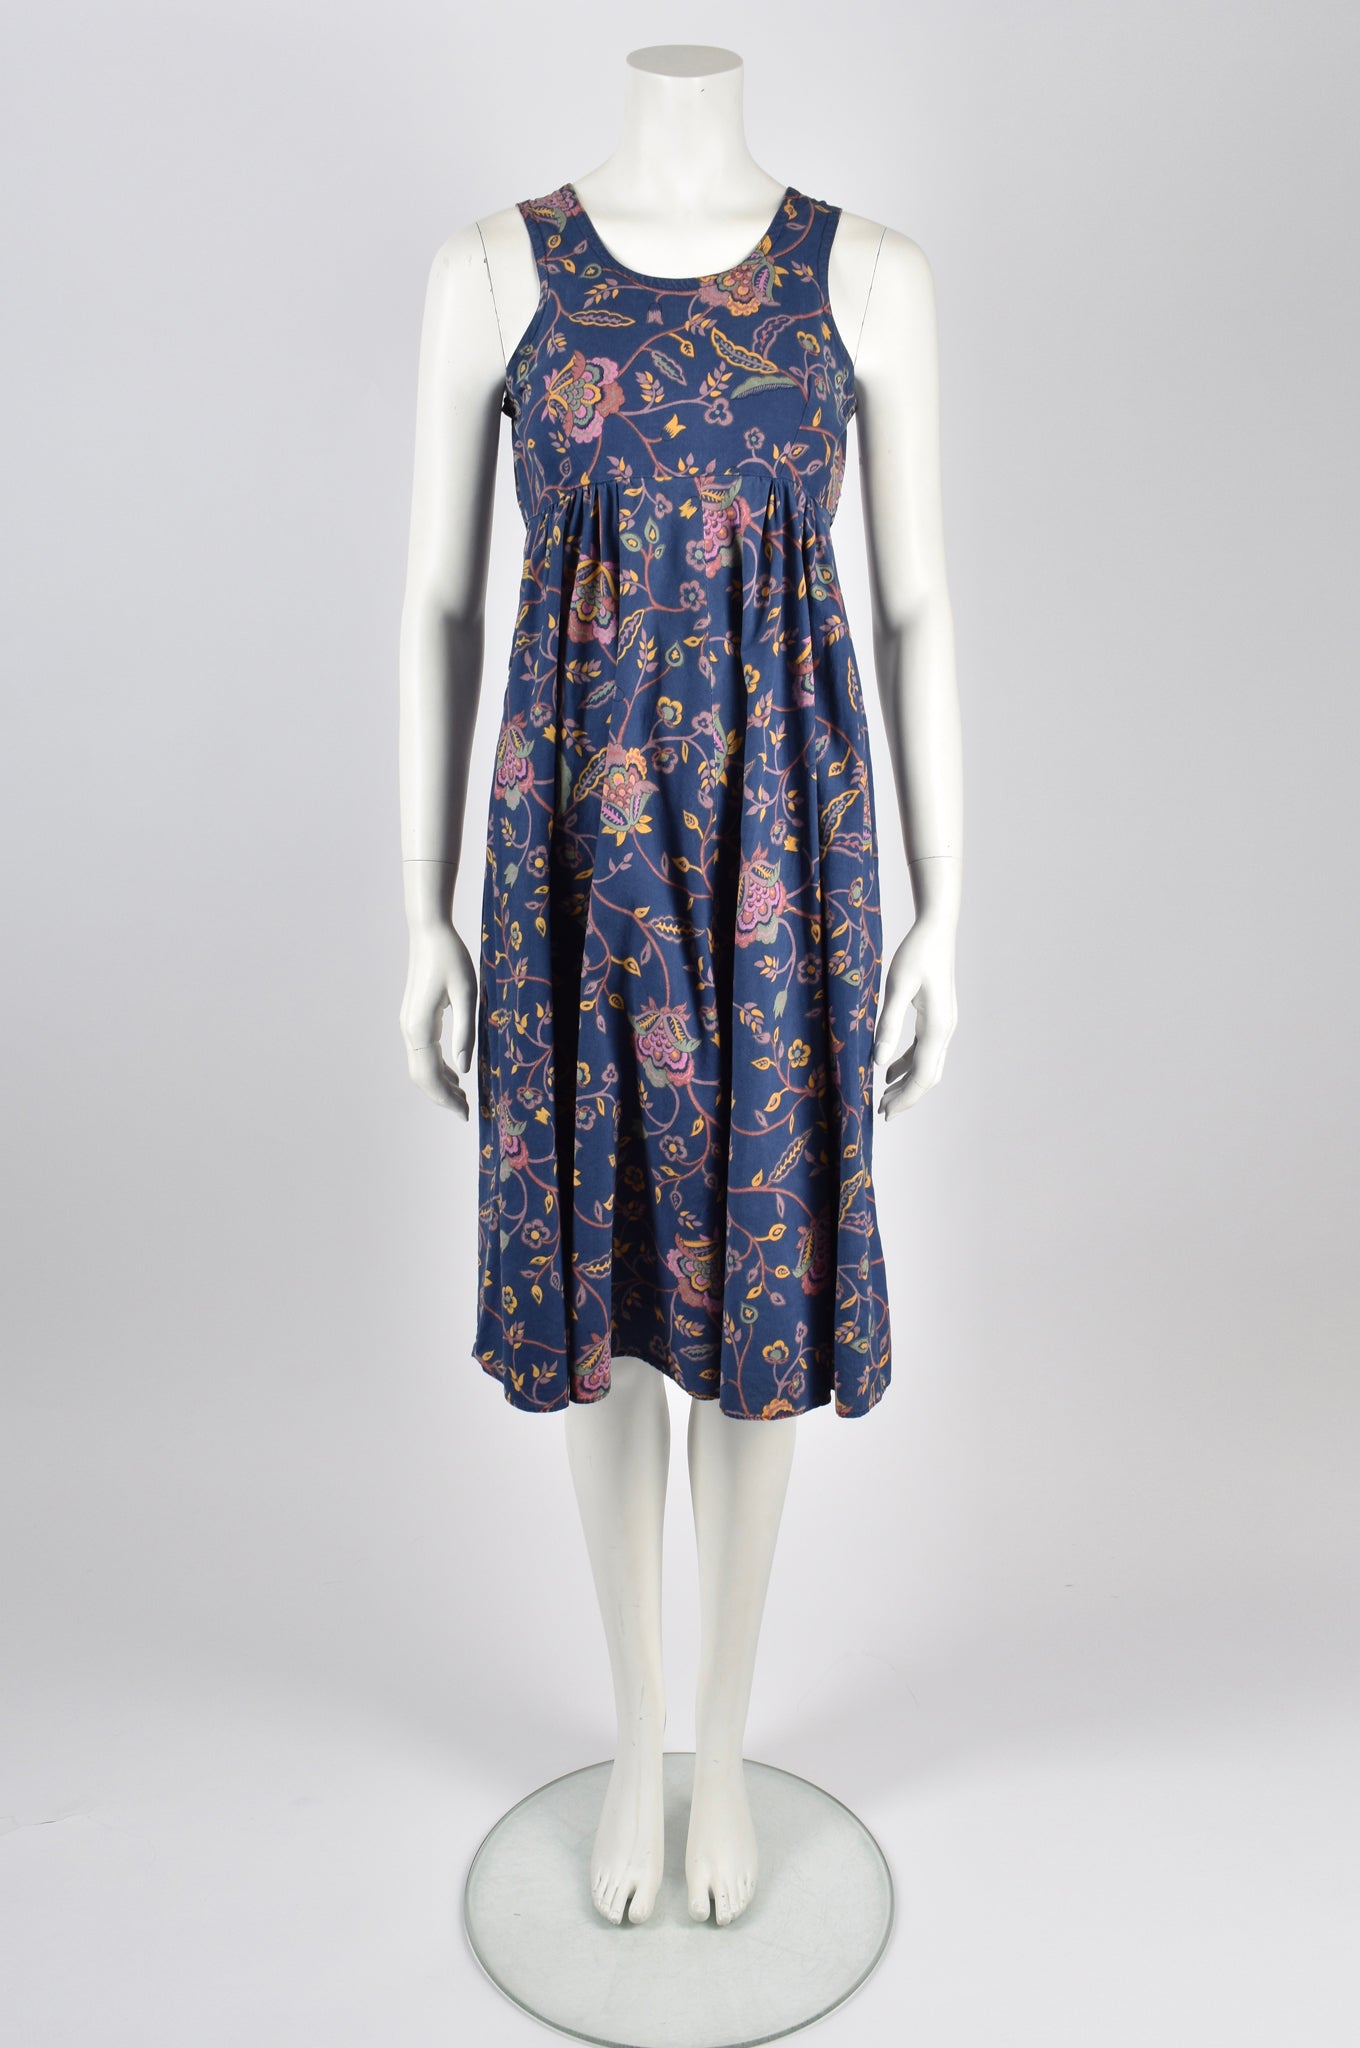 DAVID SILVERMAN 70s paisley dress / S-M